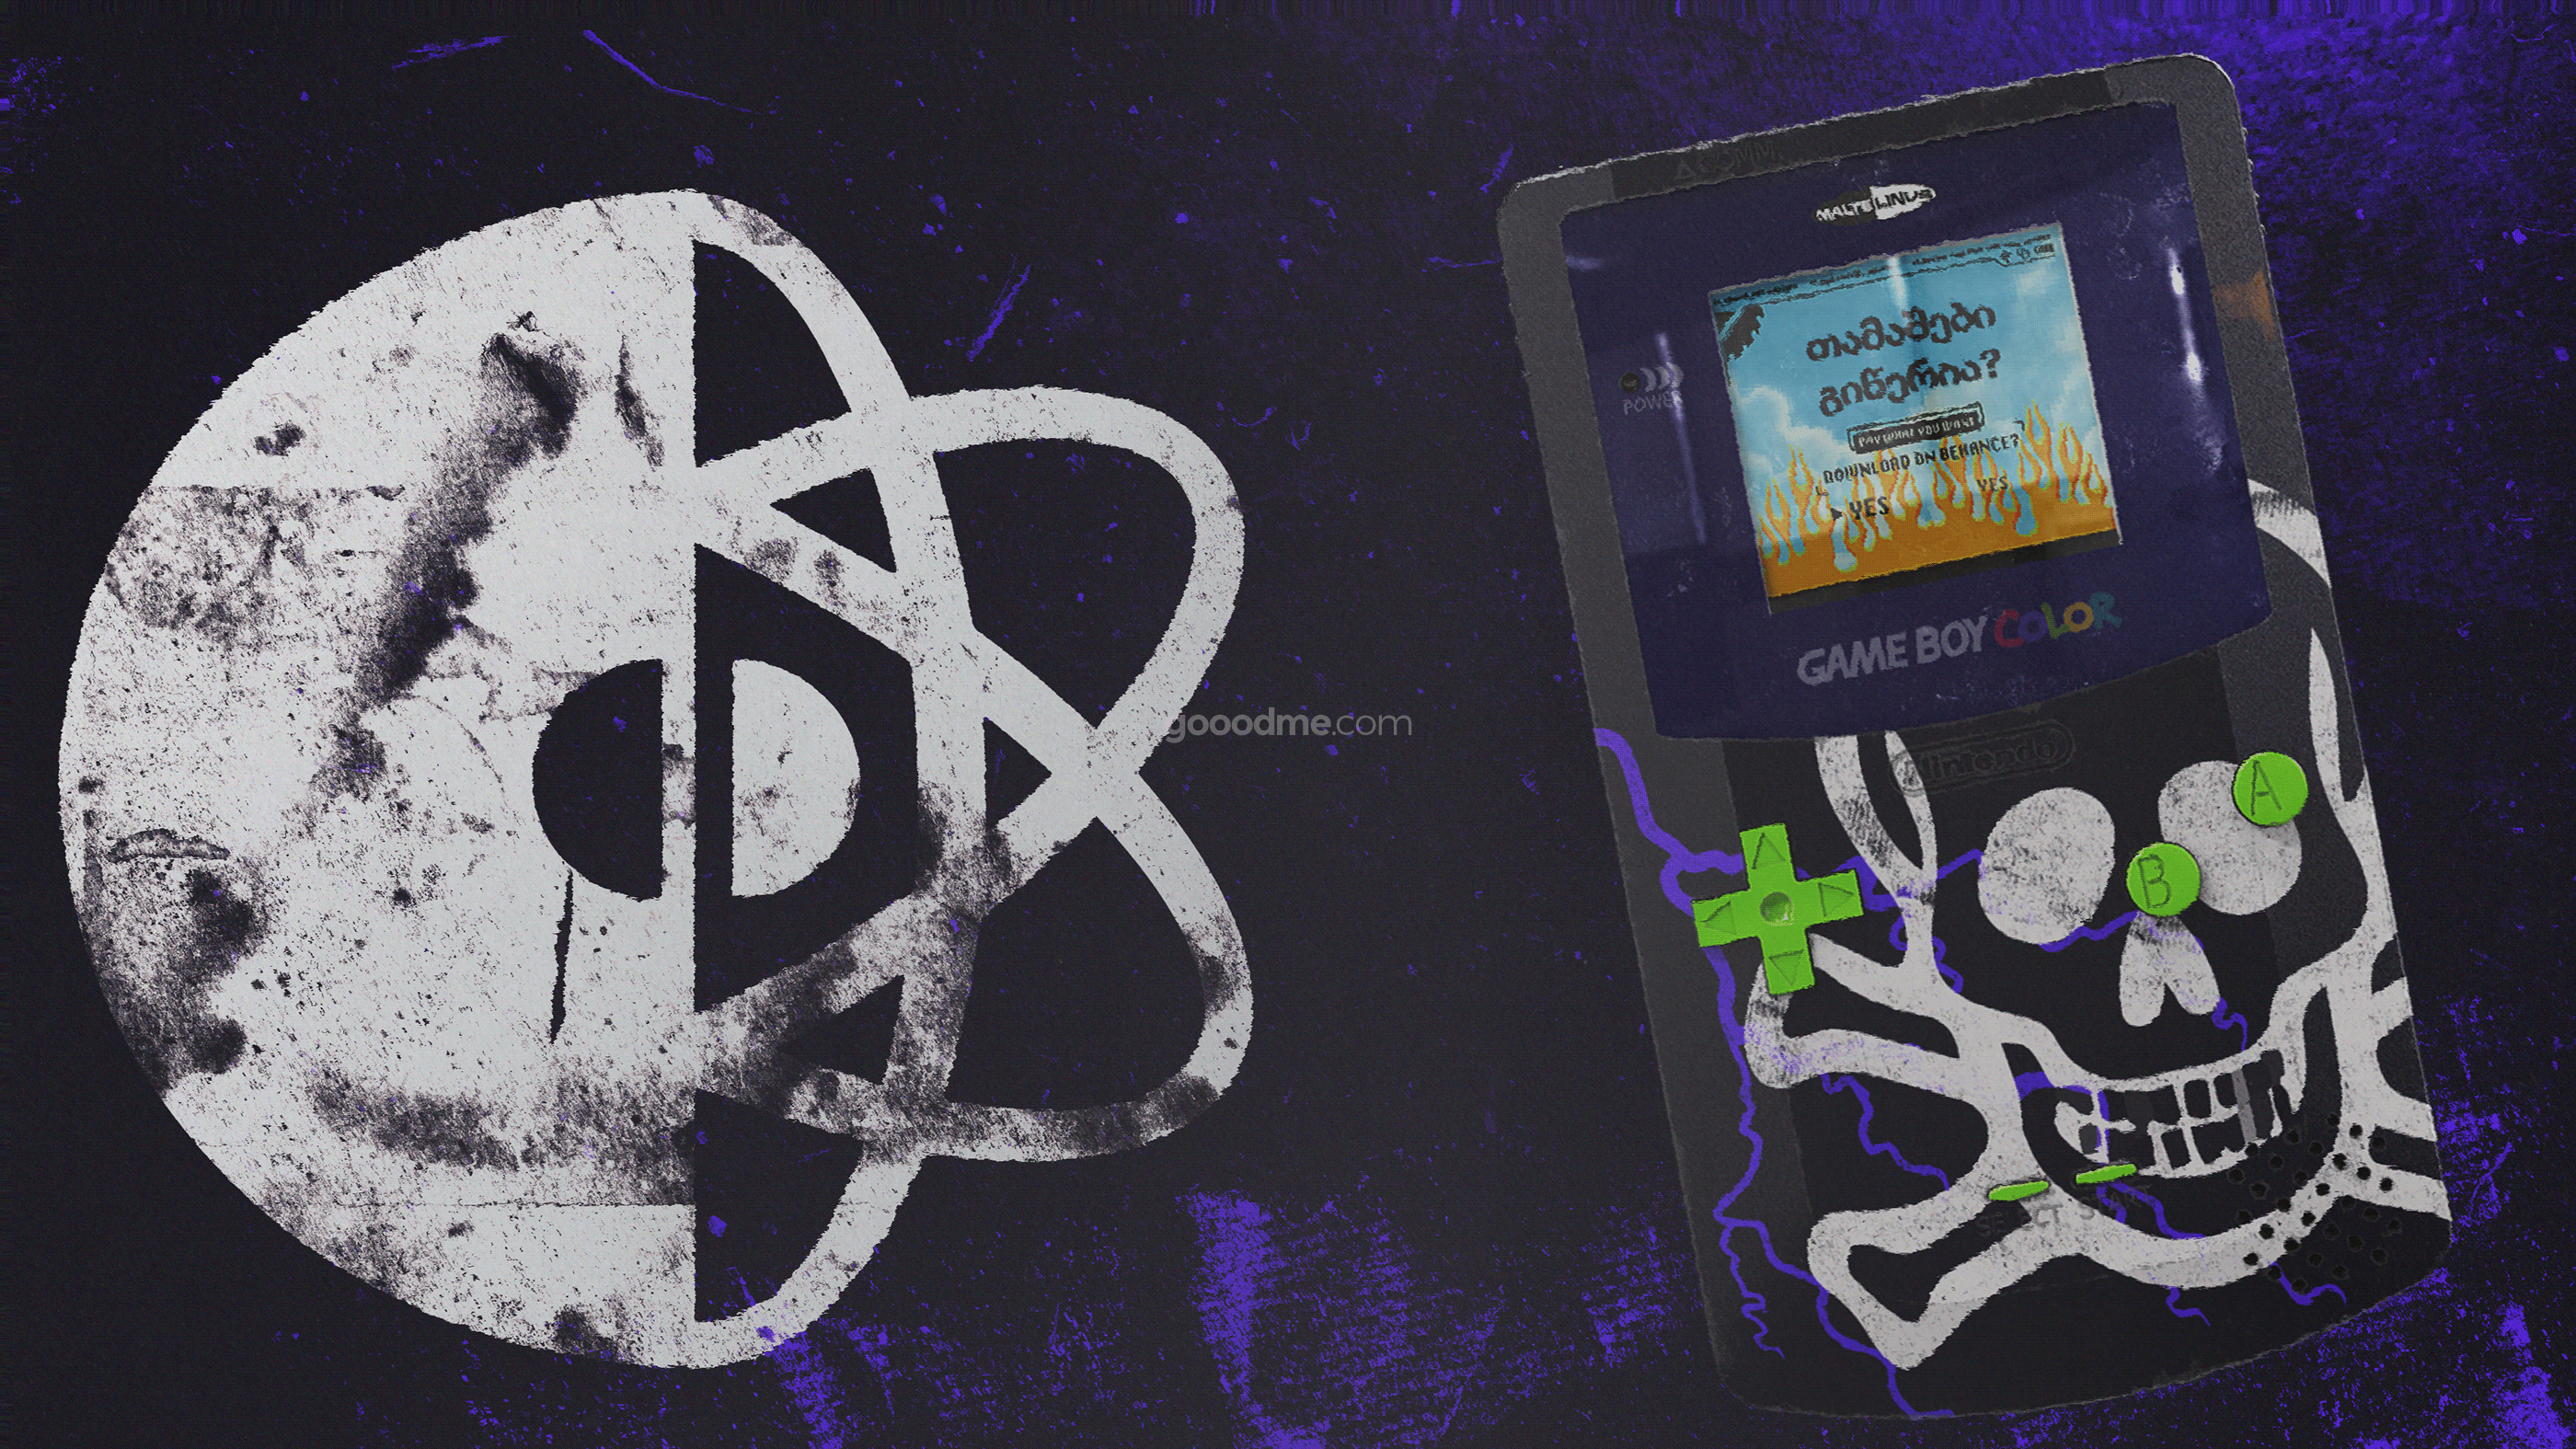 潮流嘻哈复古噪点划痕做旧酸性图标标志PS设计套件34 Grunge Icons and Marks pack